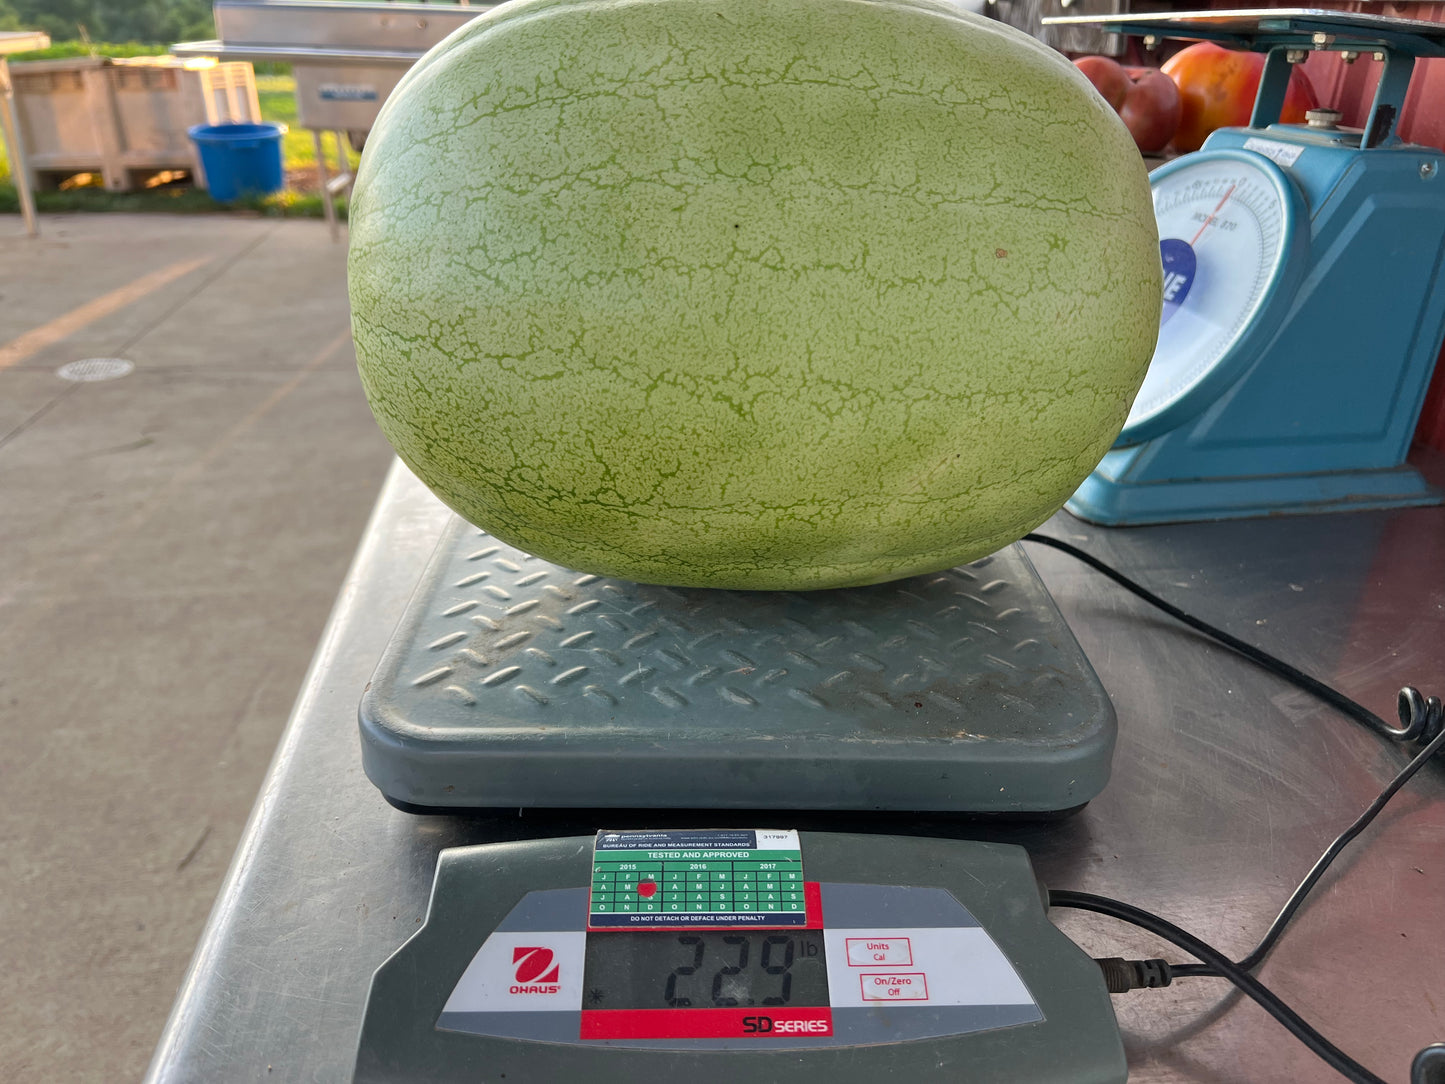 Large White Watermelon